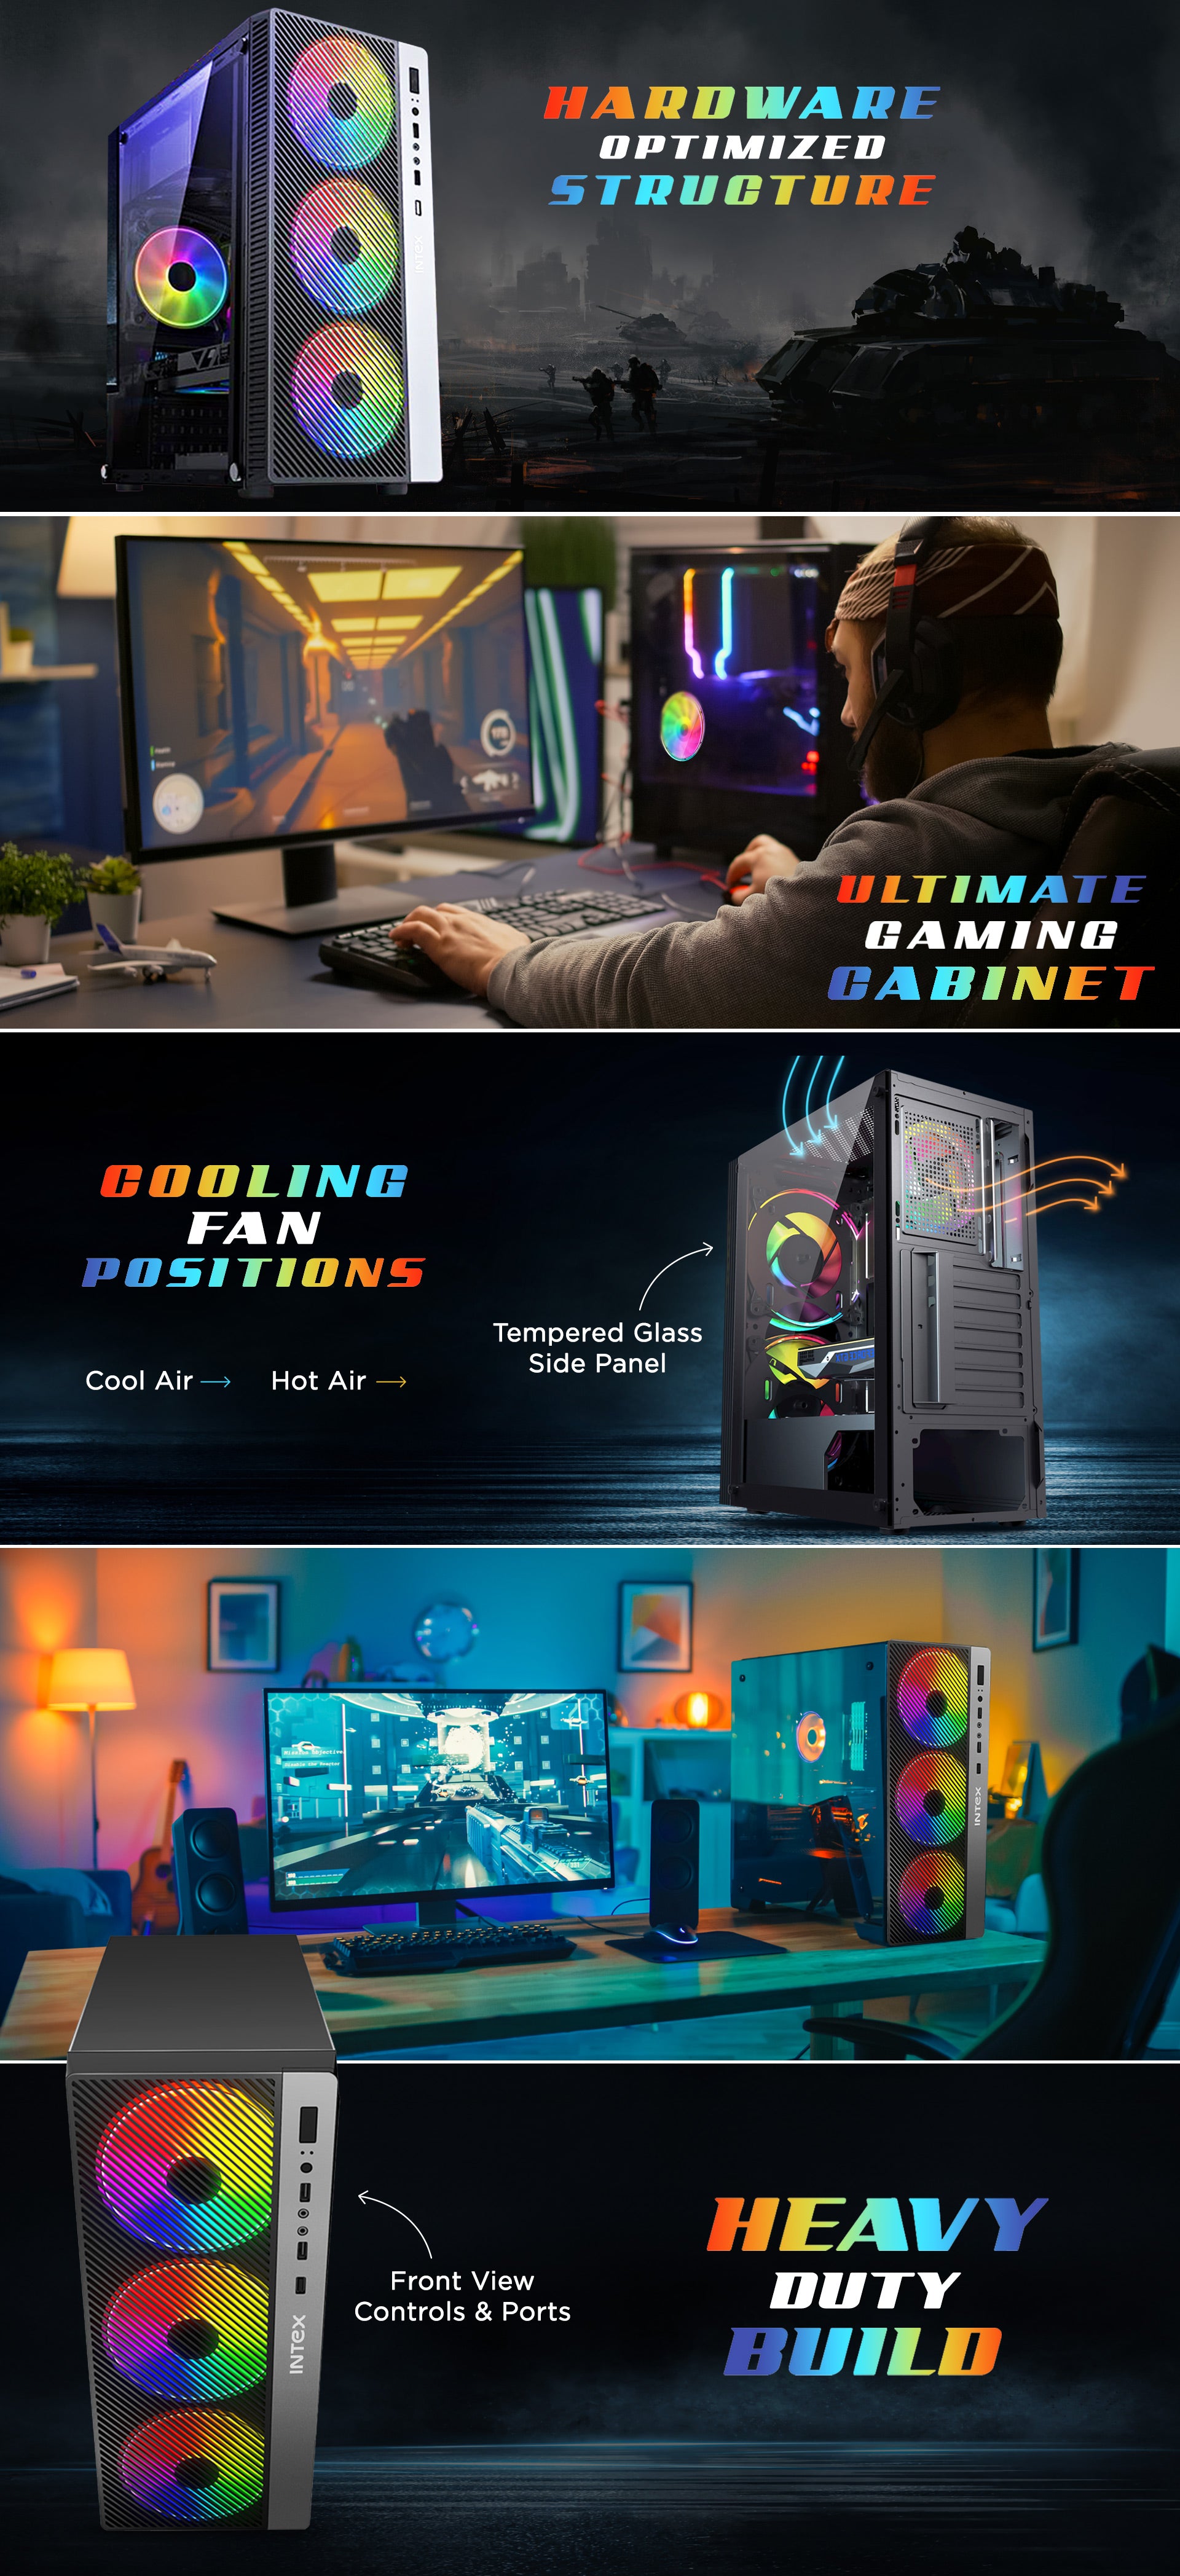  Intex Apex Computer Gaming Cabinet